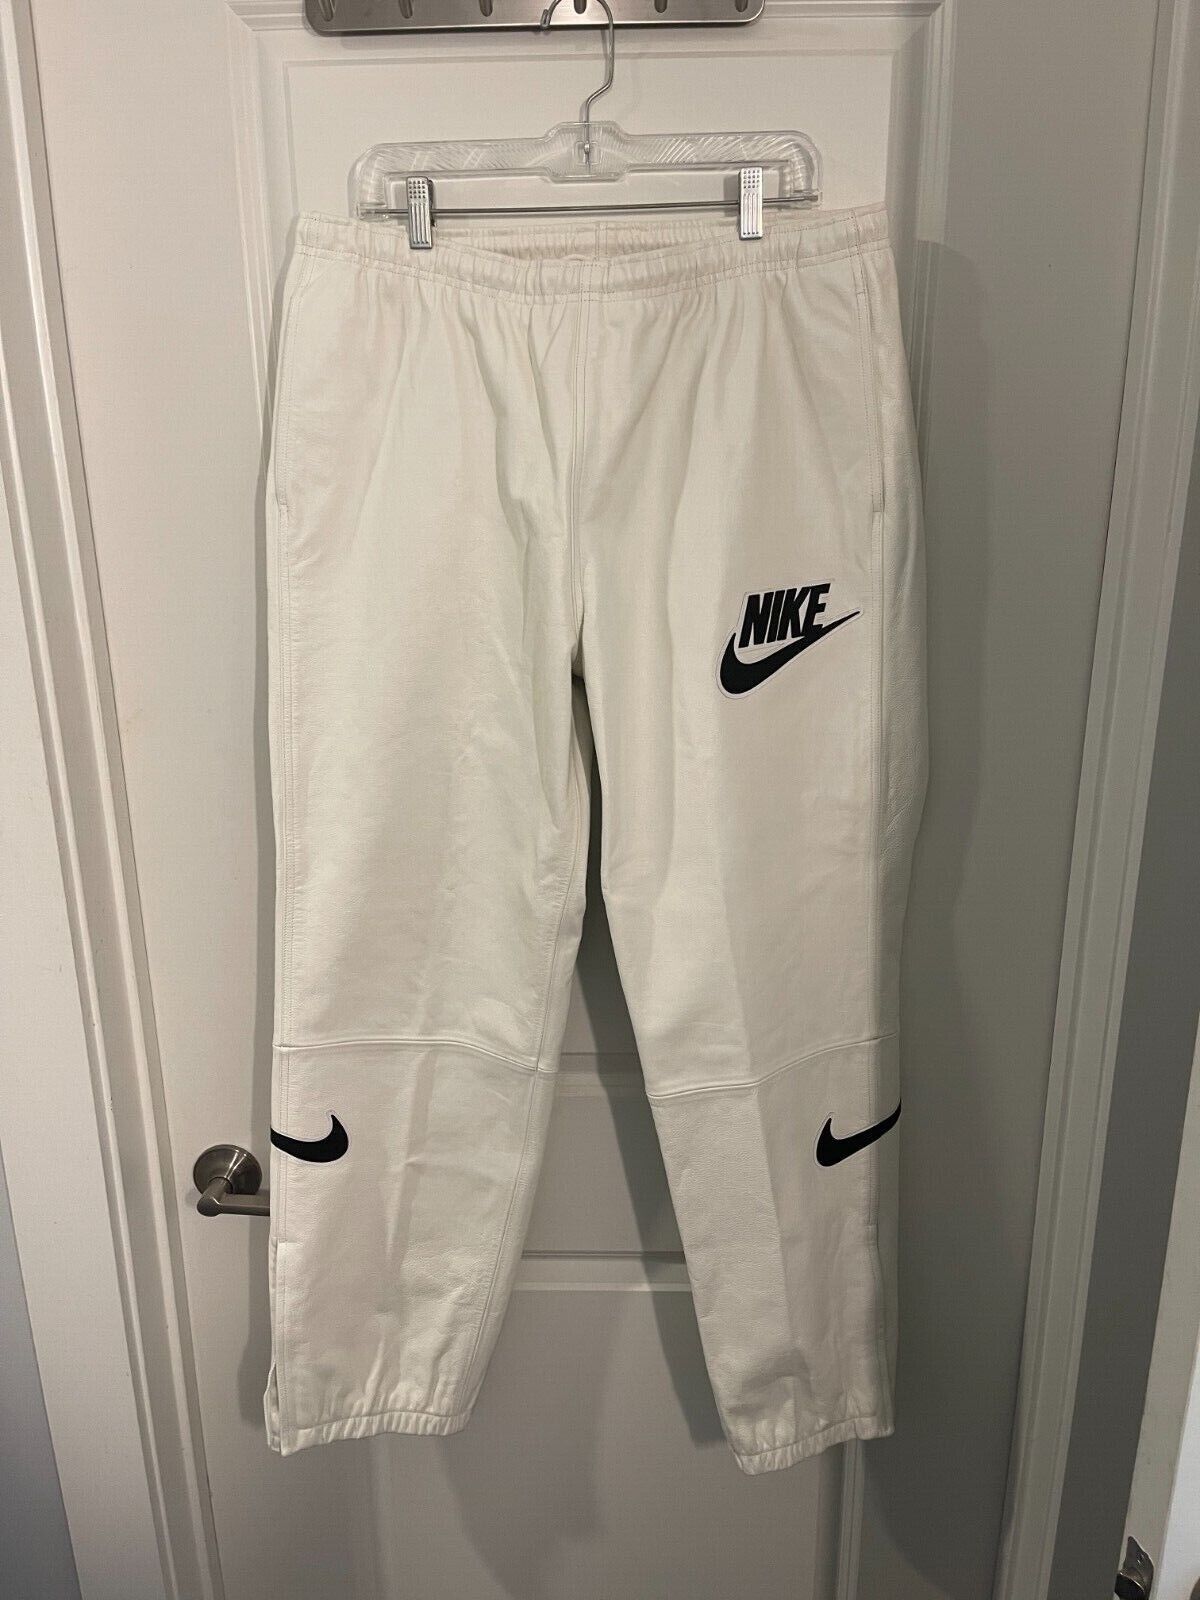 Nike Supreme Warm Up Pant | Grailed